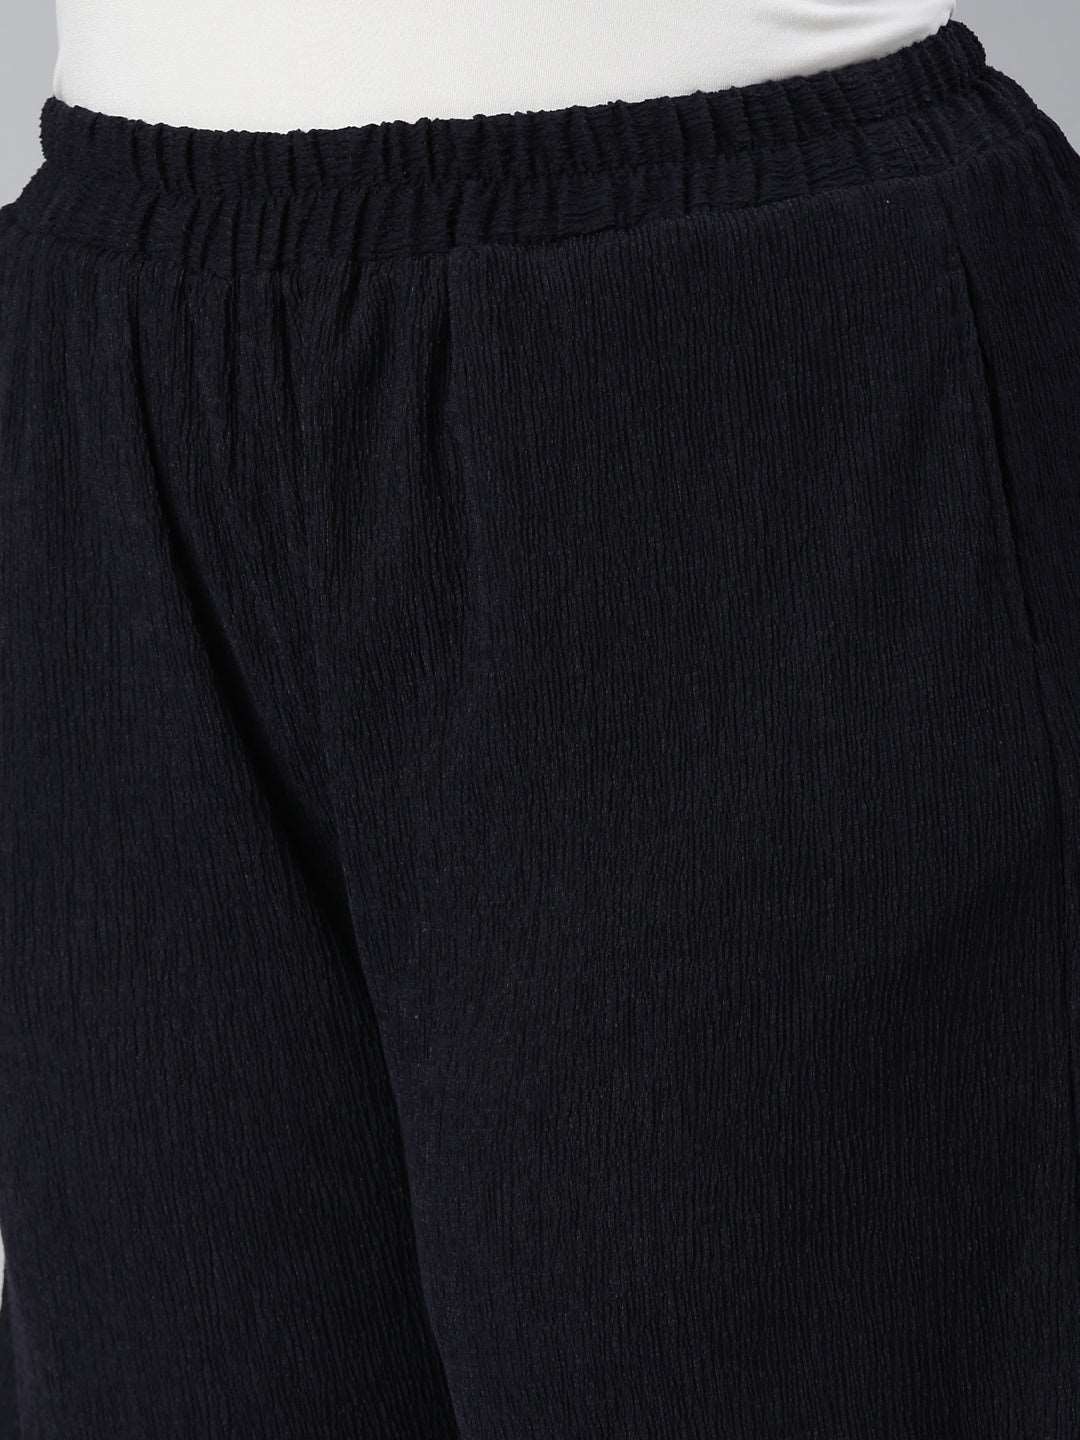 TheShaili - Women's Regular fit Crinkled palazzo pant